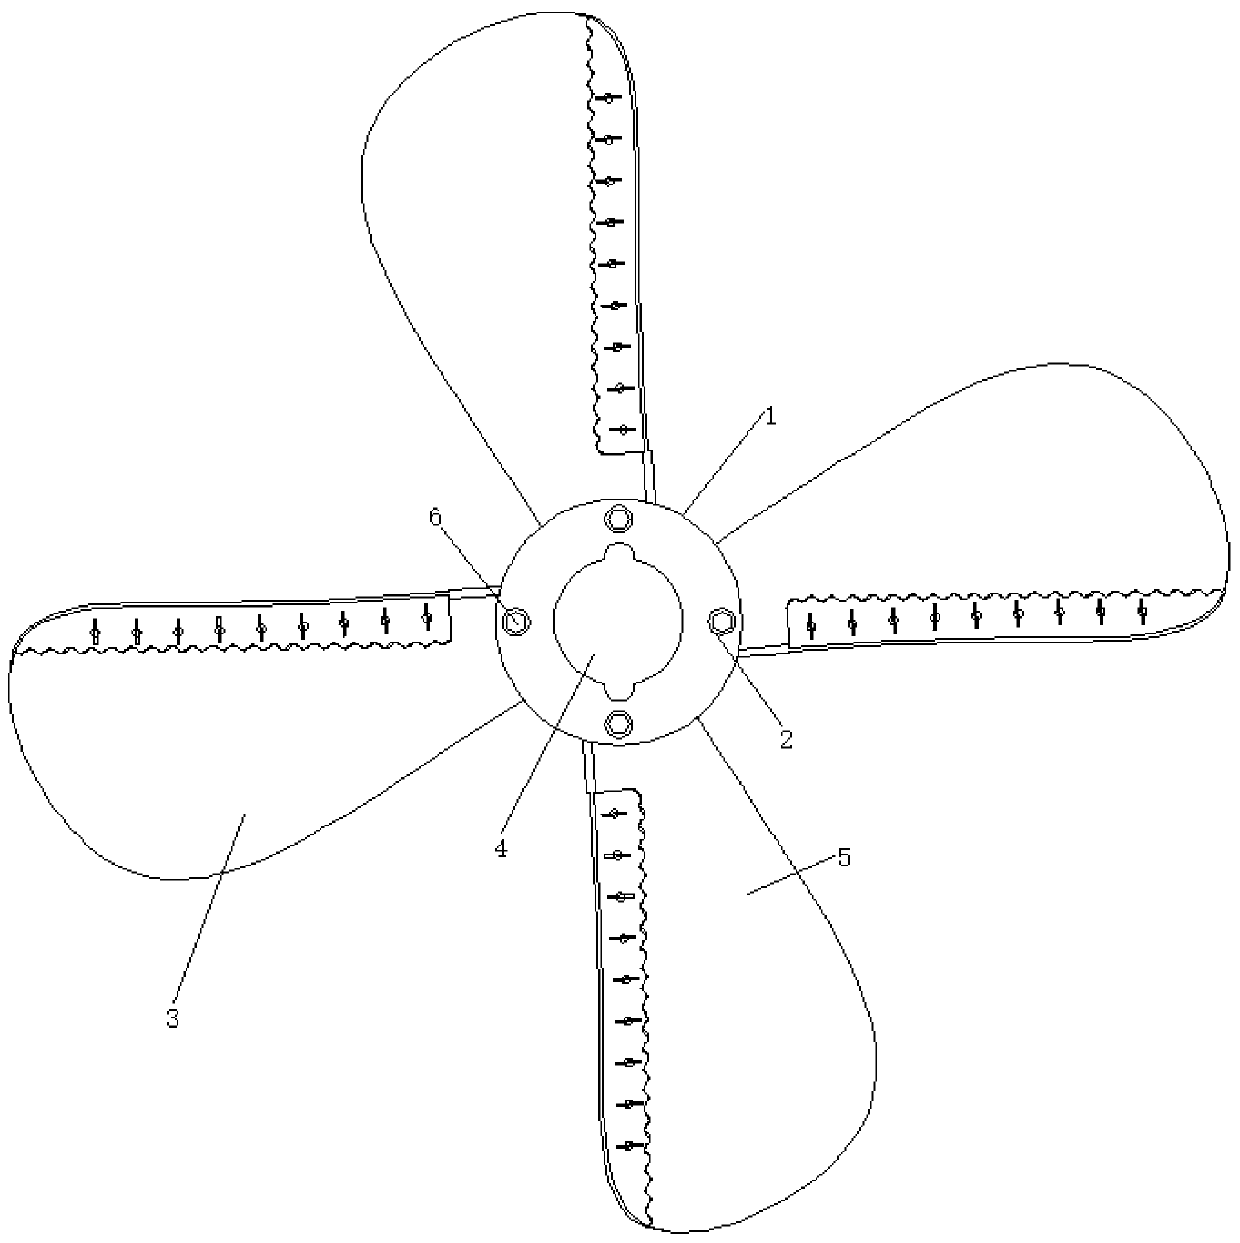 A low-loss marine propeller